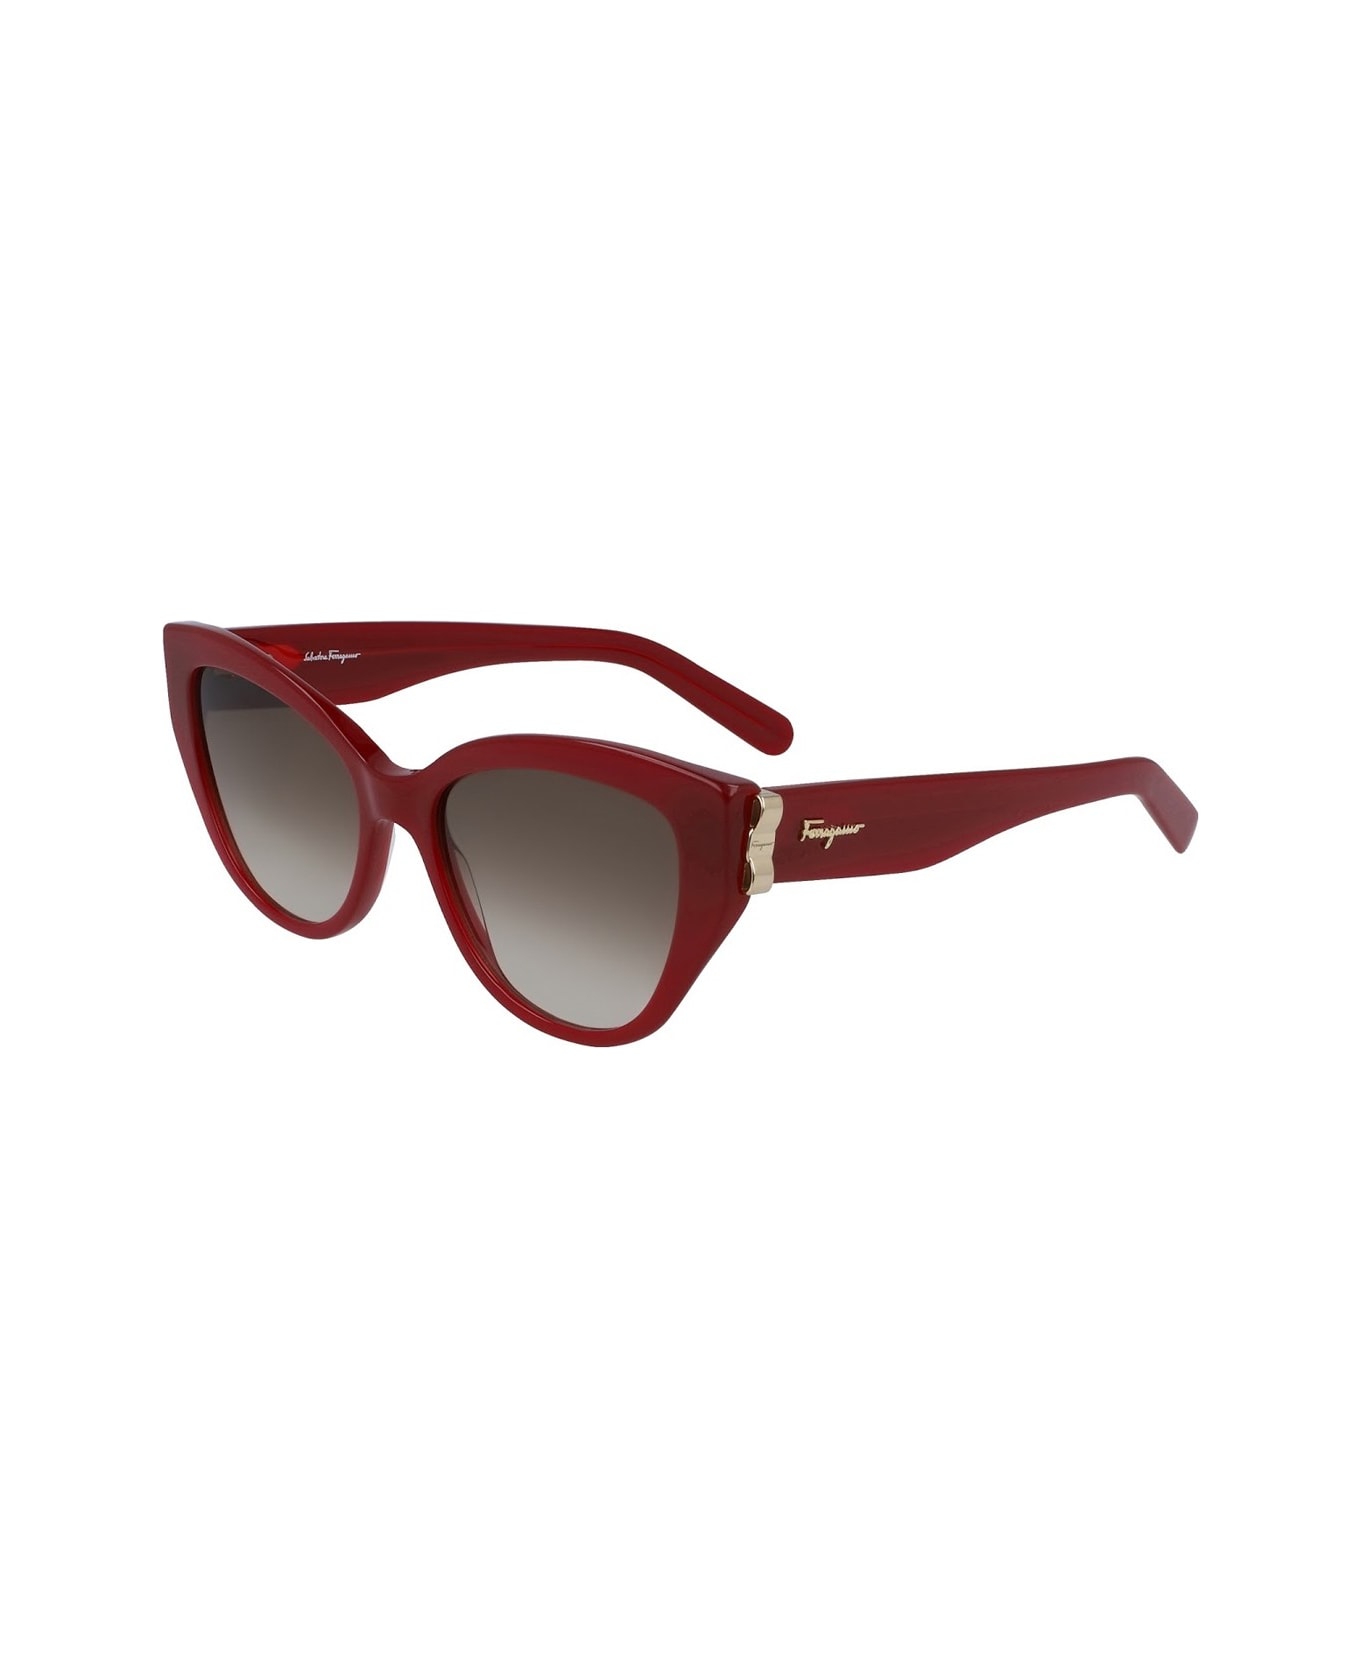 Salvatore Ferragamo Eyewear Salavore Ferragamo Sf969s Sunglasses - Rosso サングラス